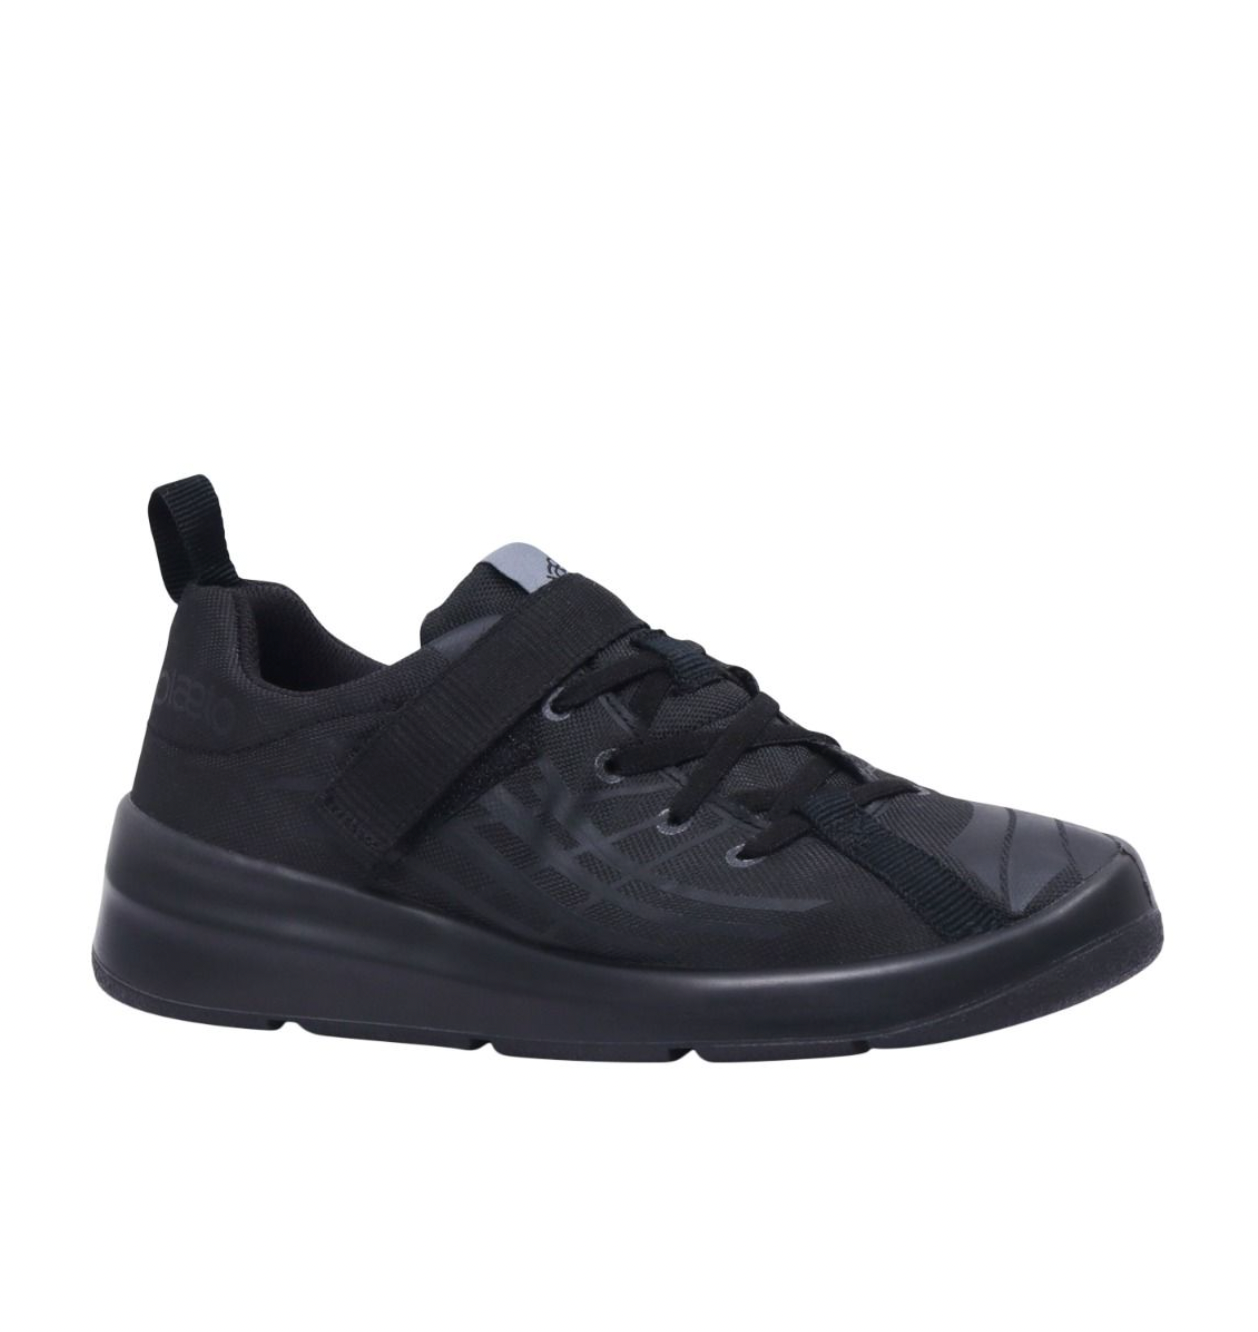 Plaeto Kid - Nova Unisex School Shoes (Velcro) - UK 1 To UK 4 - EU 33 To EU 36.5 - Black